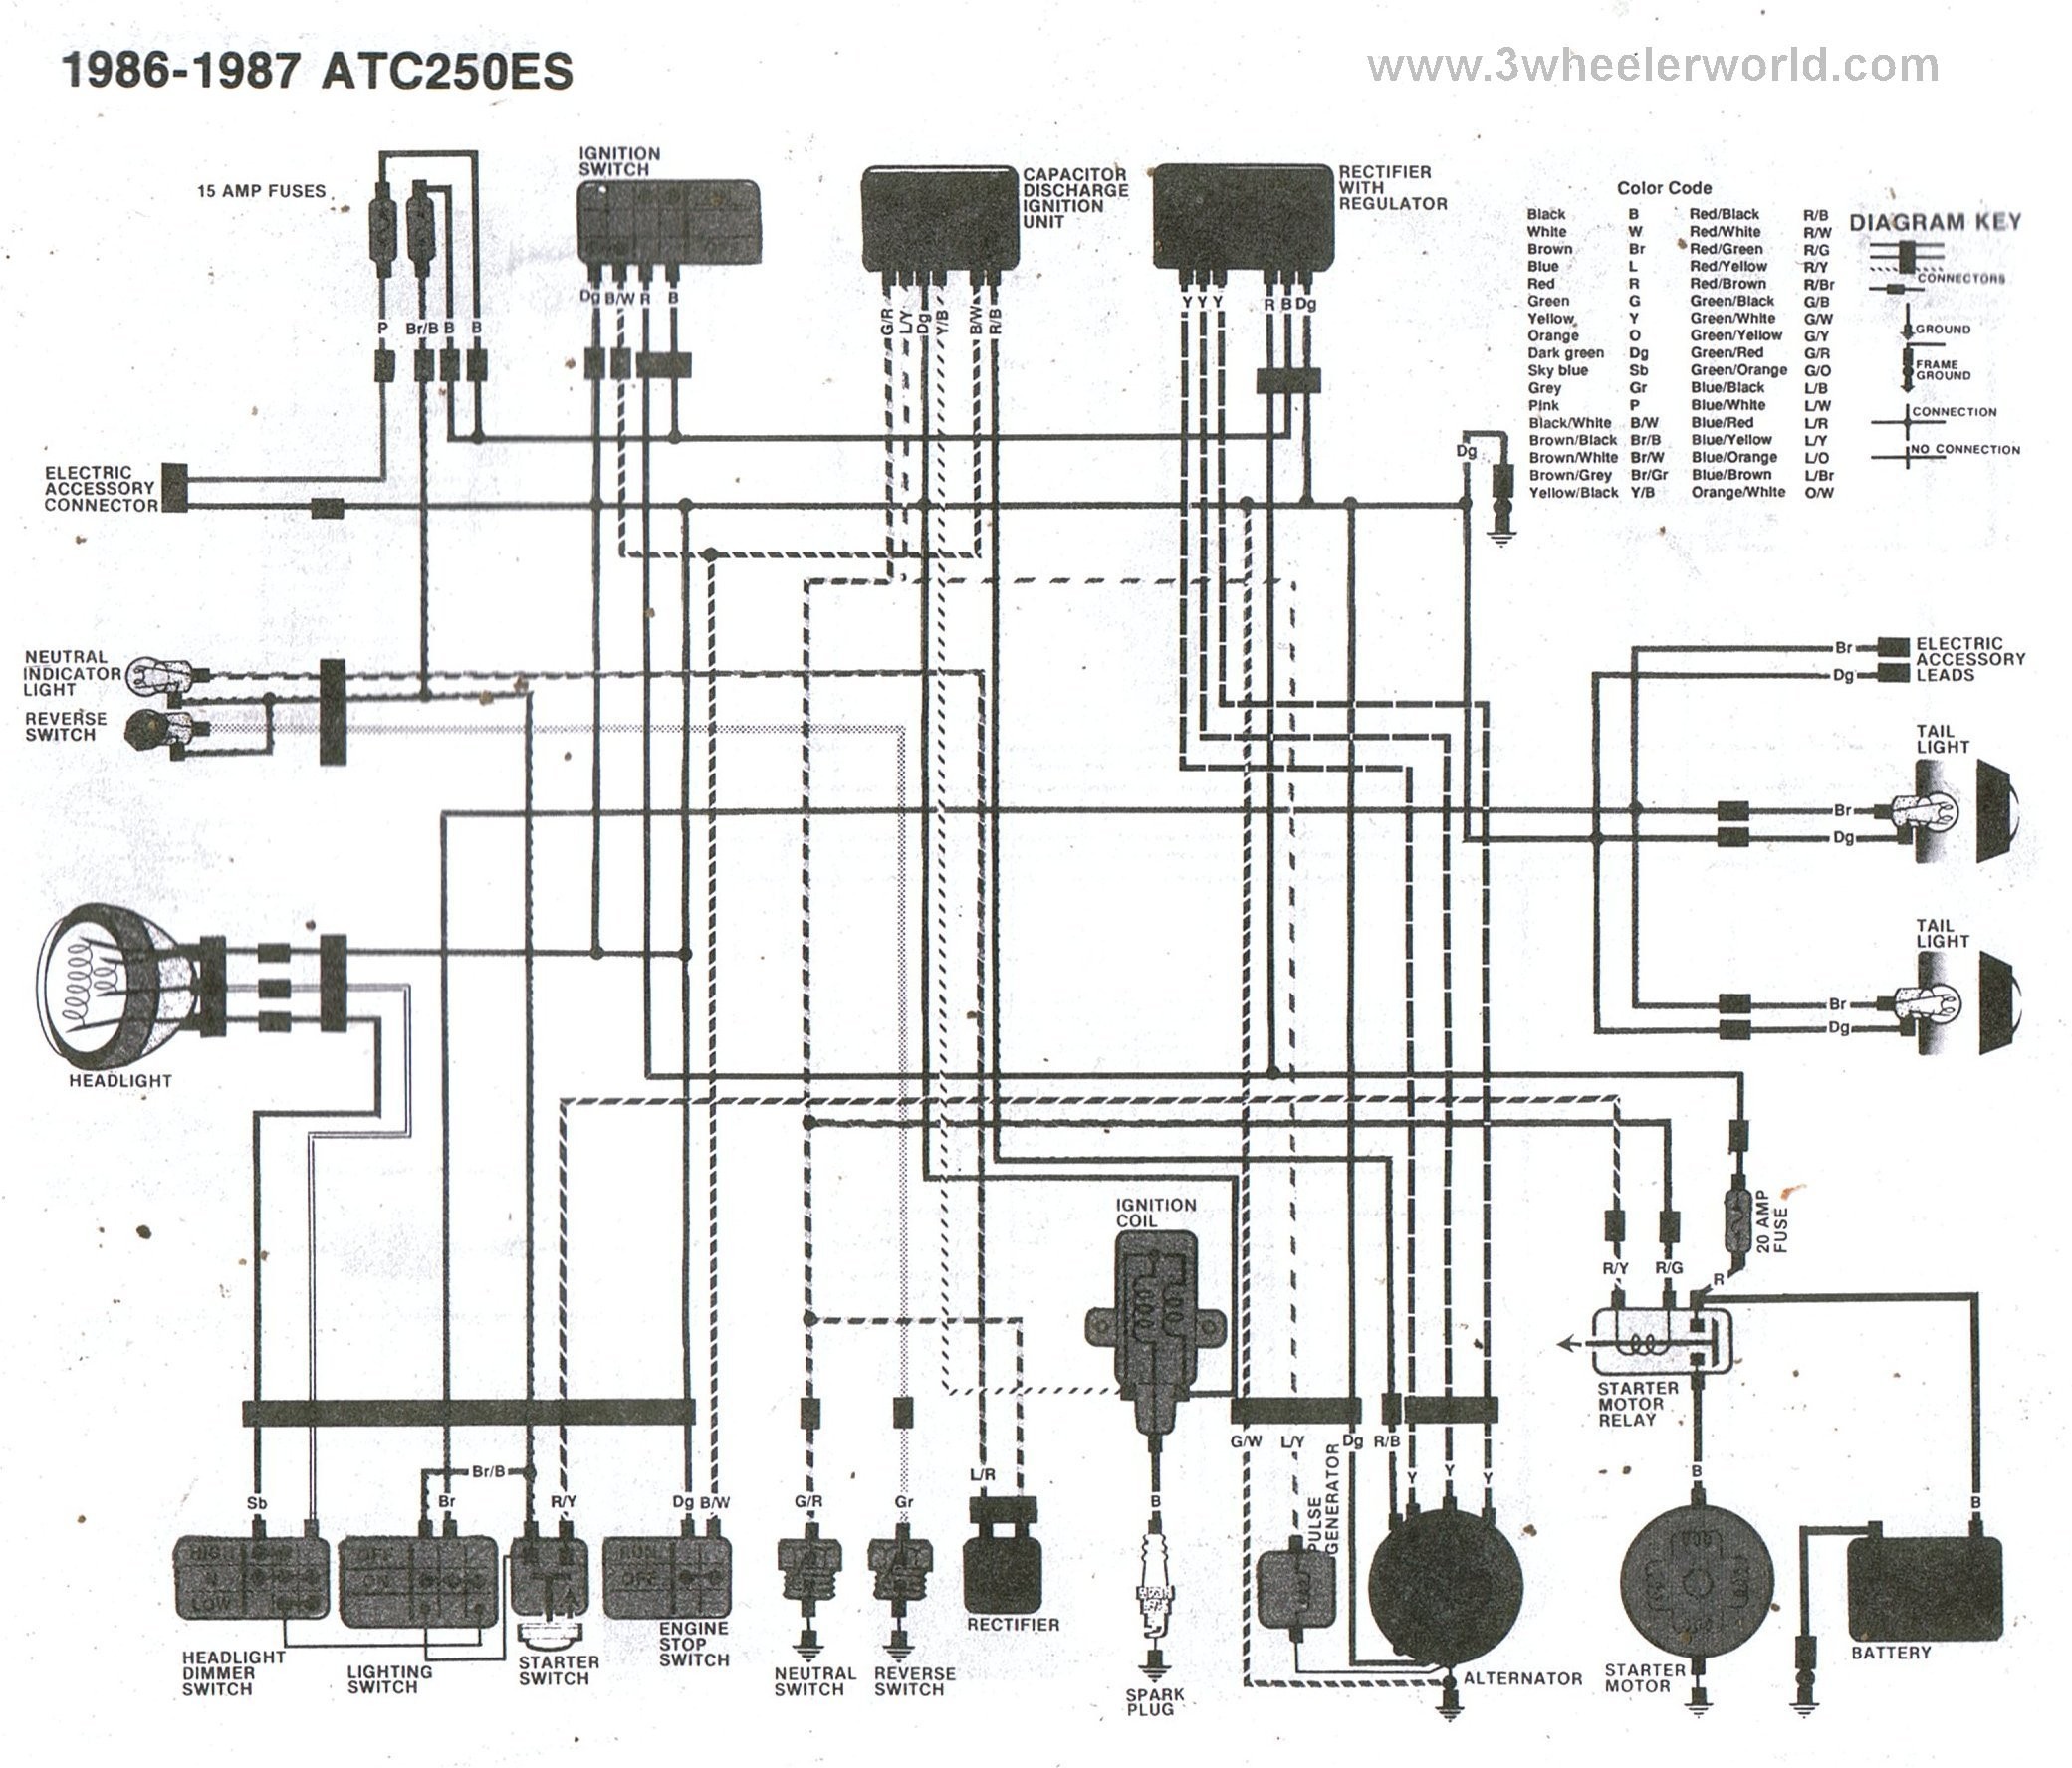 wiring diagram moreover 1984 honda fl250 odyssey wiring diagram rh 208 167 249 254